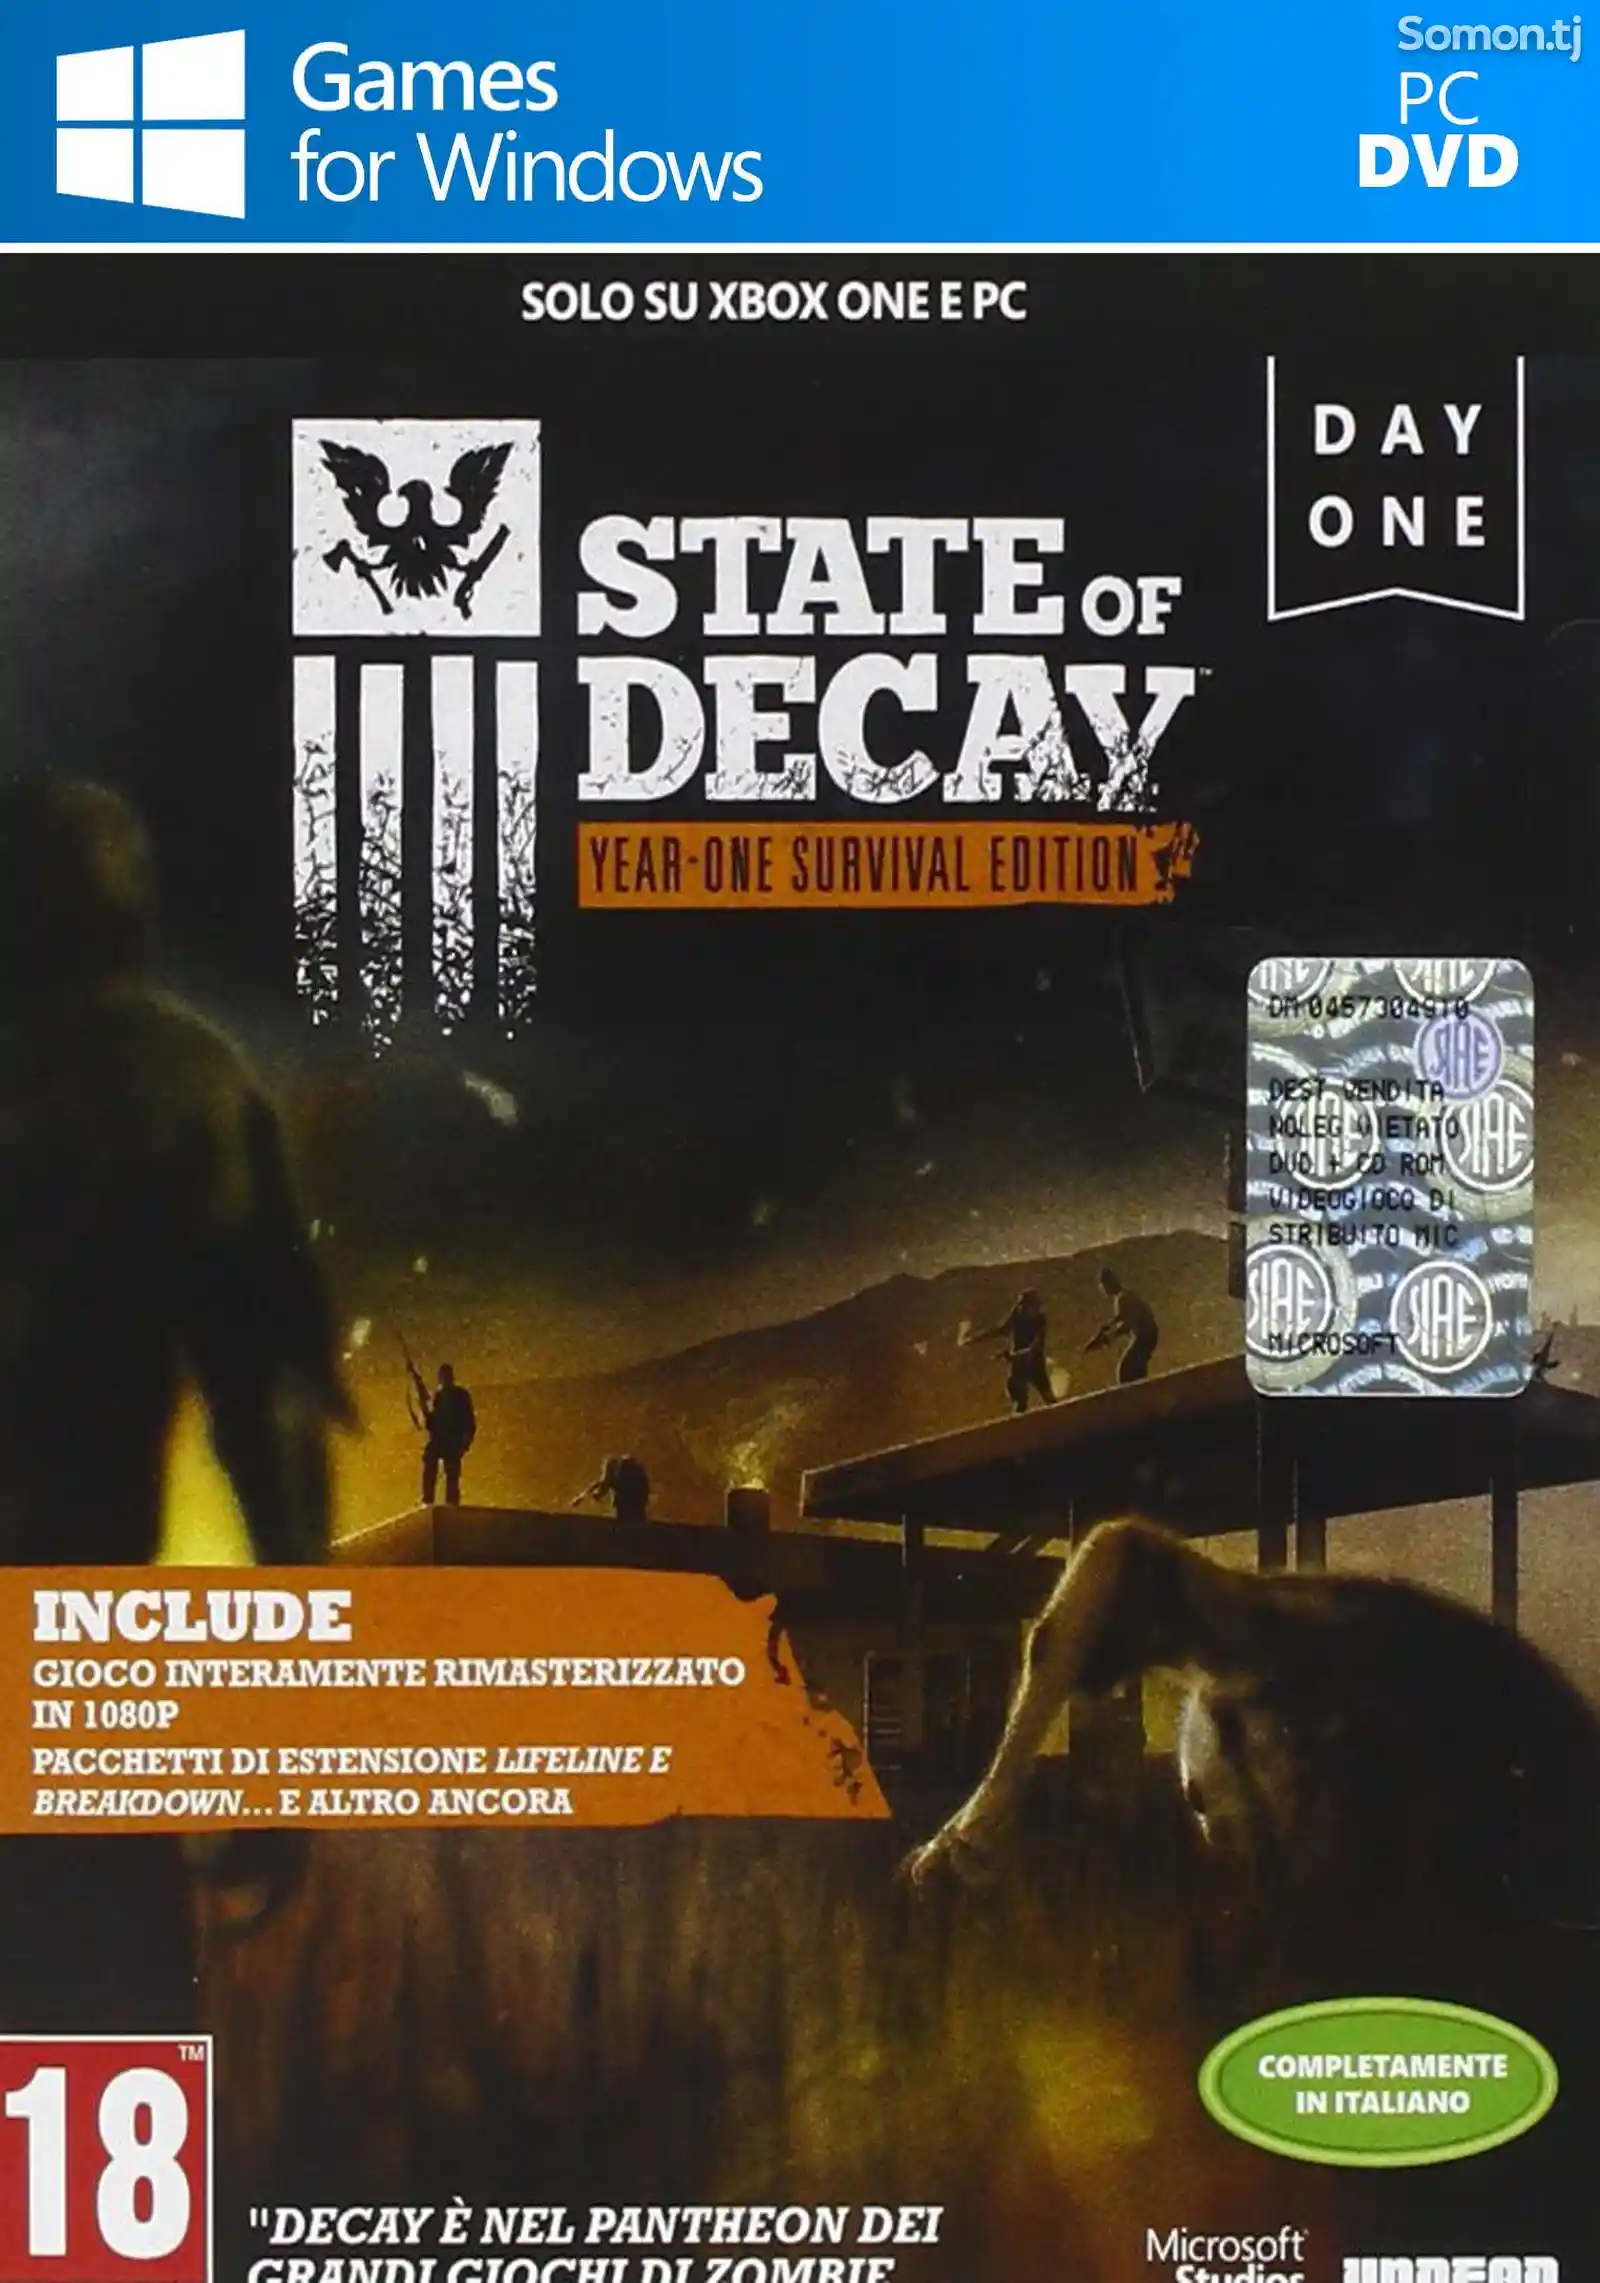 Игра State of decay year one survival edition для компьютера-пк-pc-1